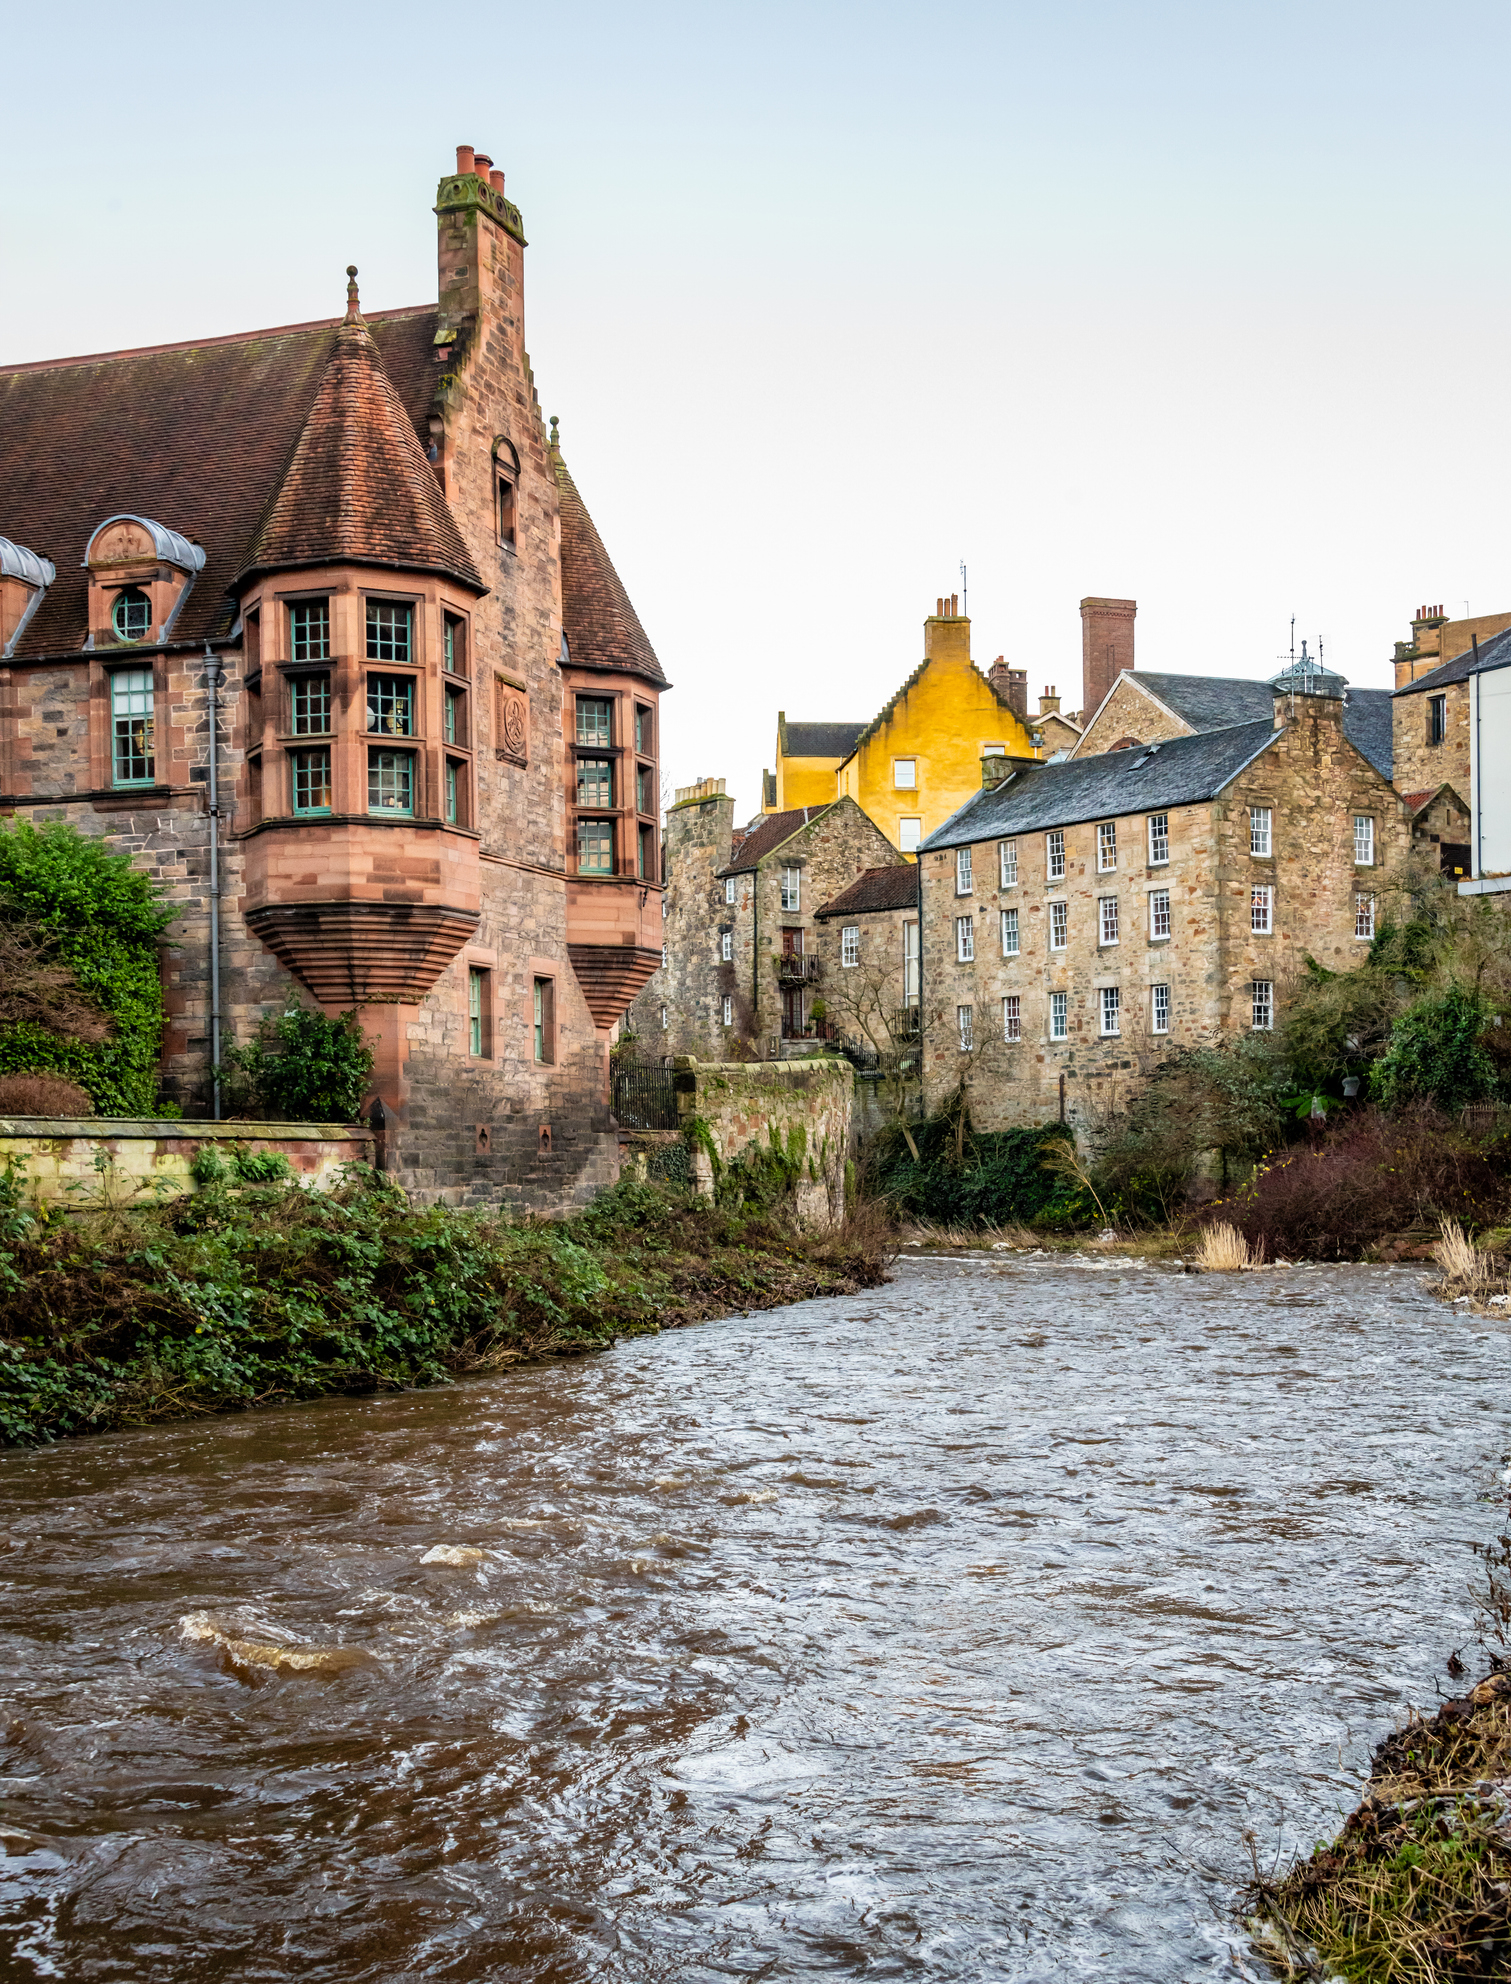 Old stone buildings near a river in Edinburgh, Scotland